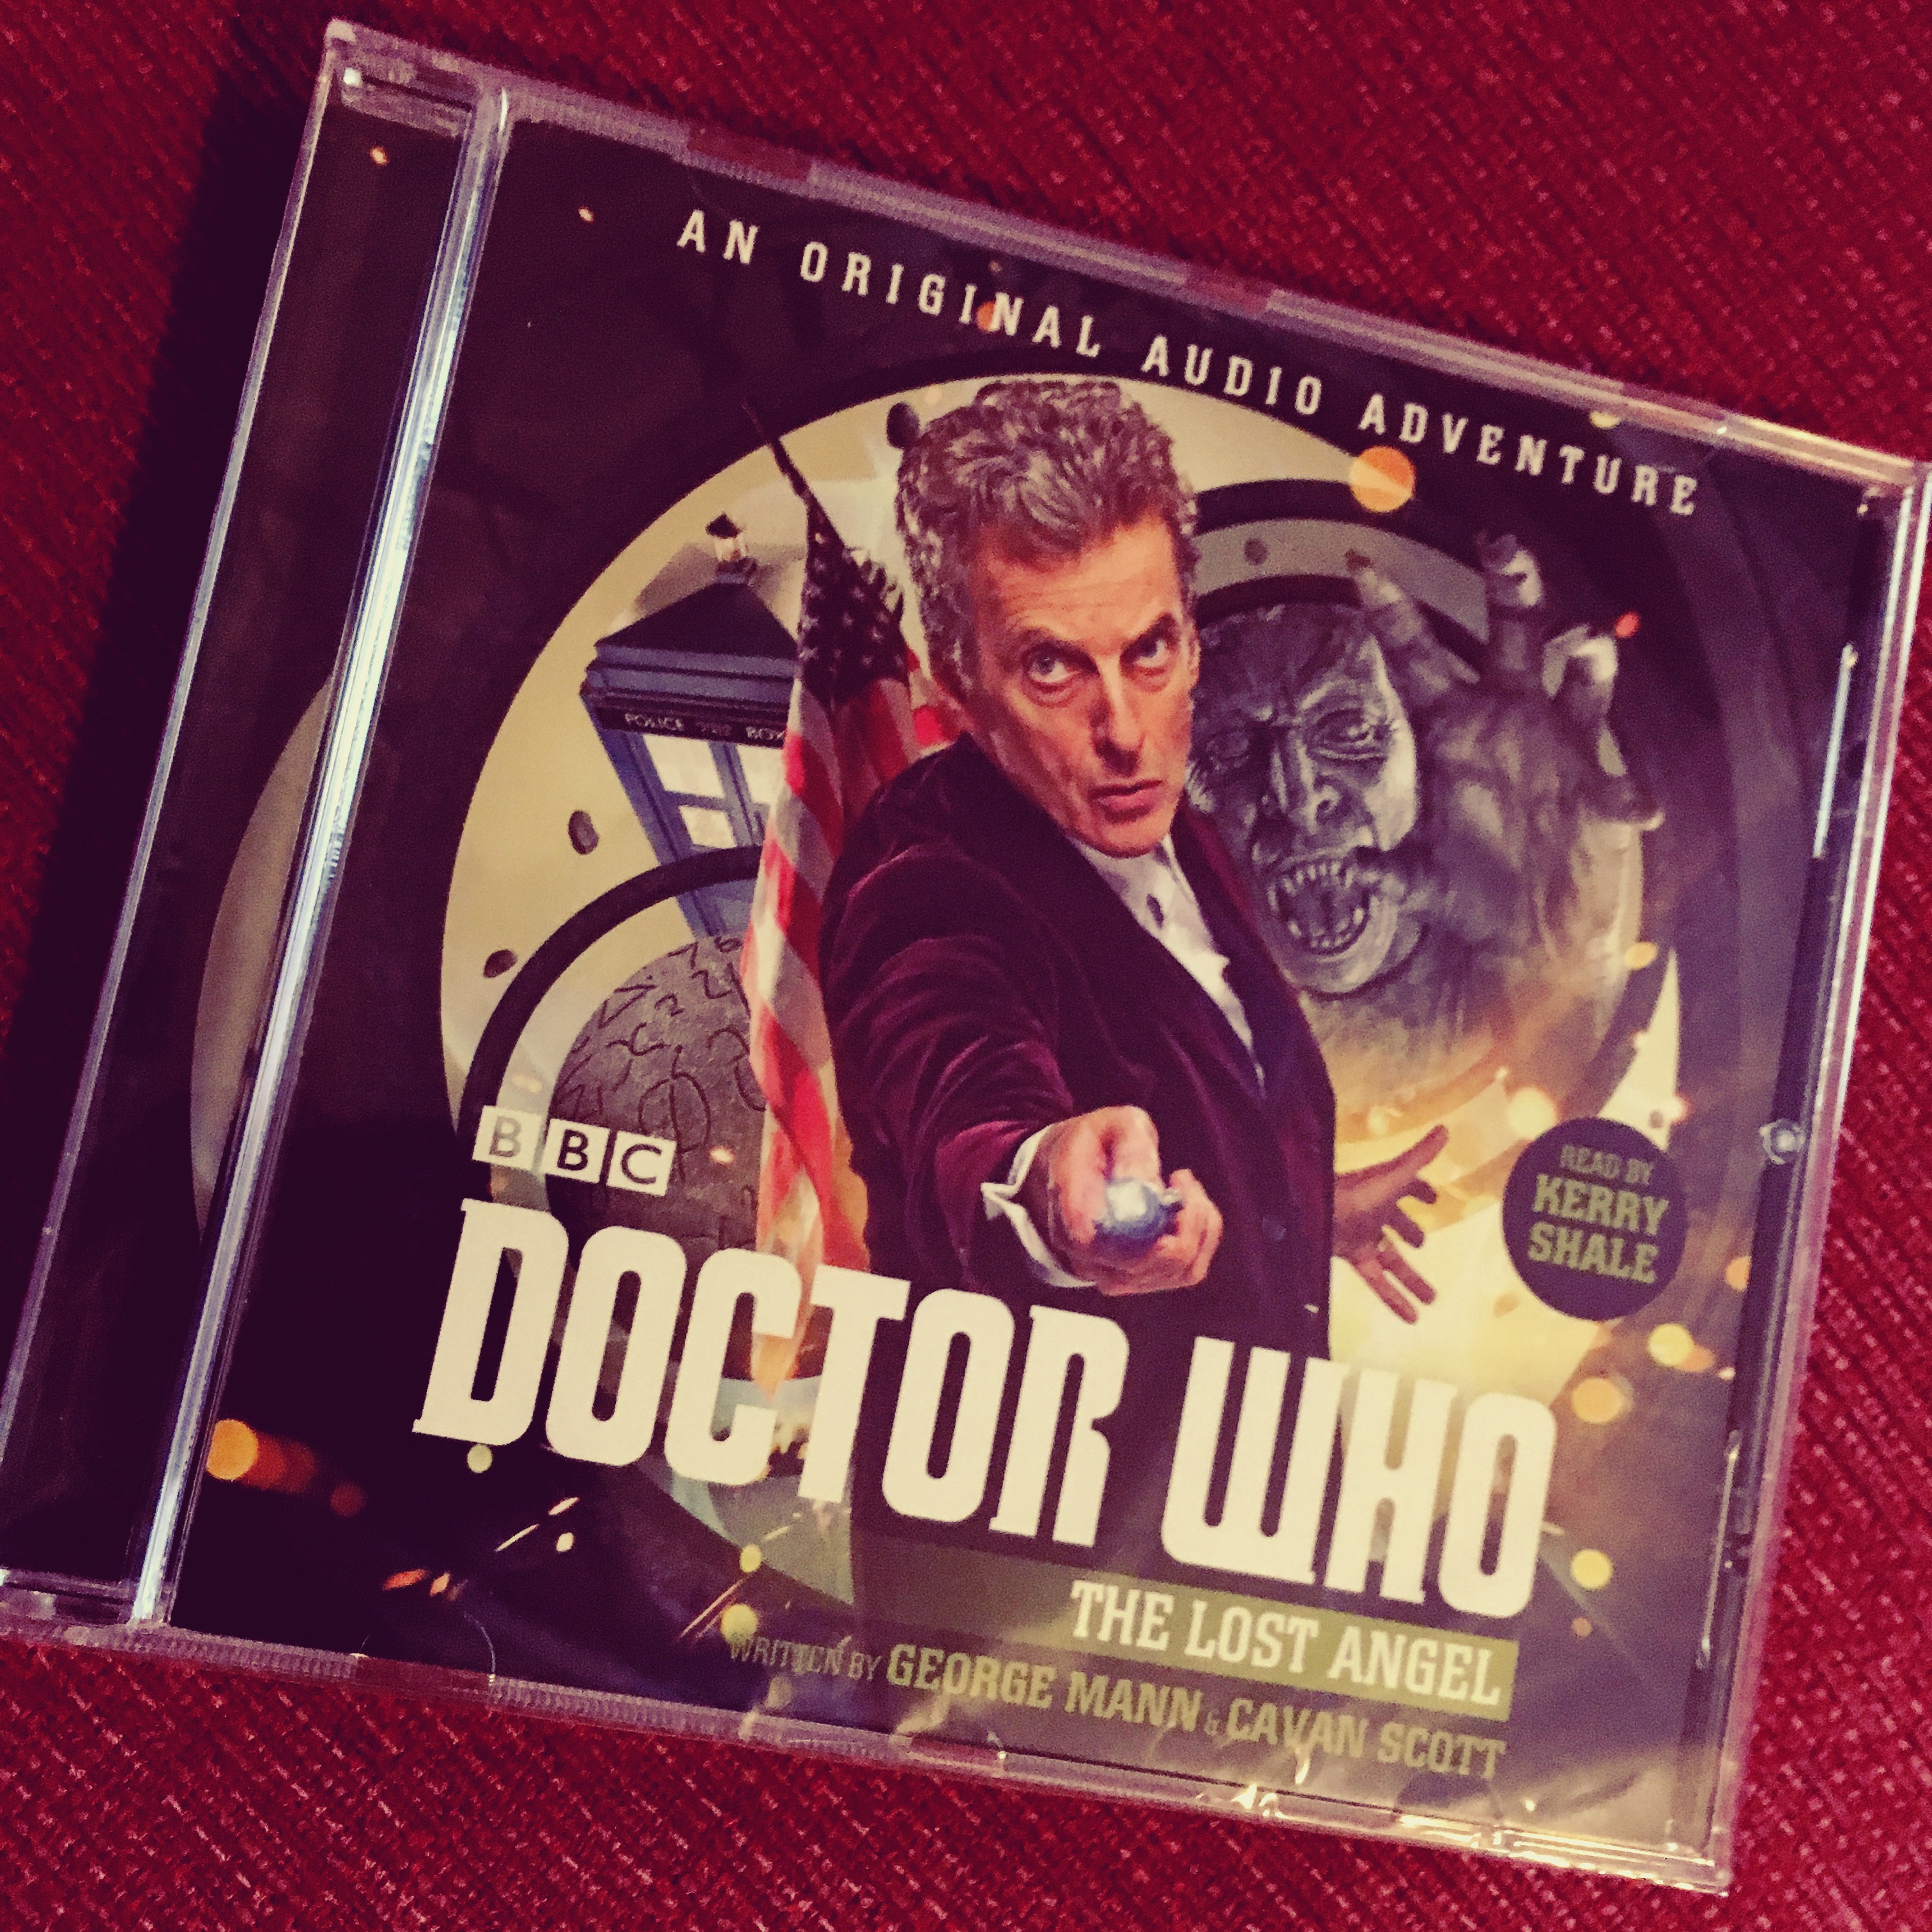 Doctor Who by Cavan Scott